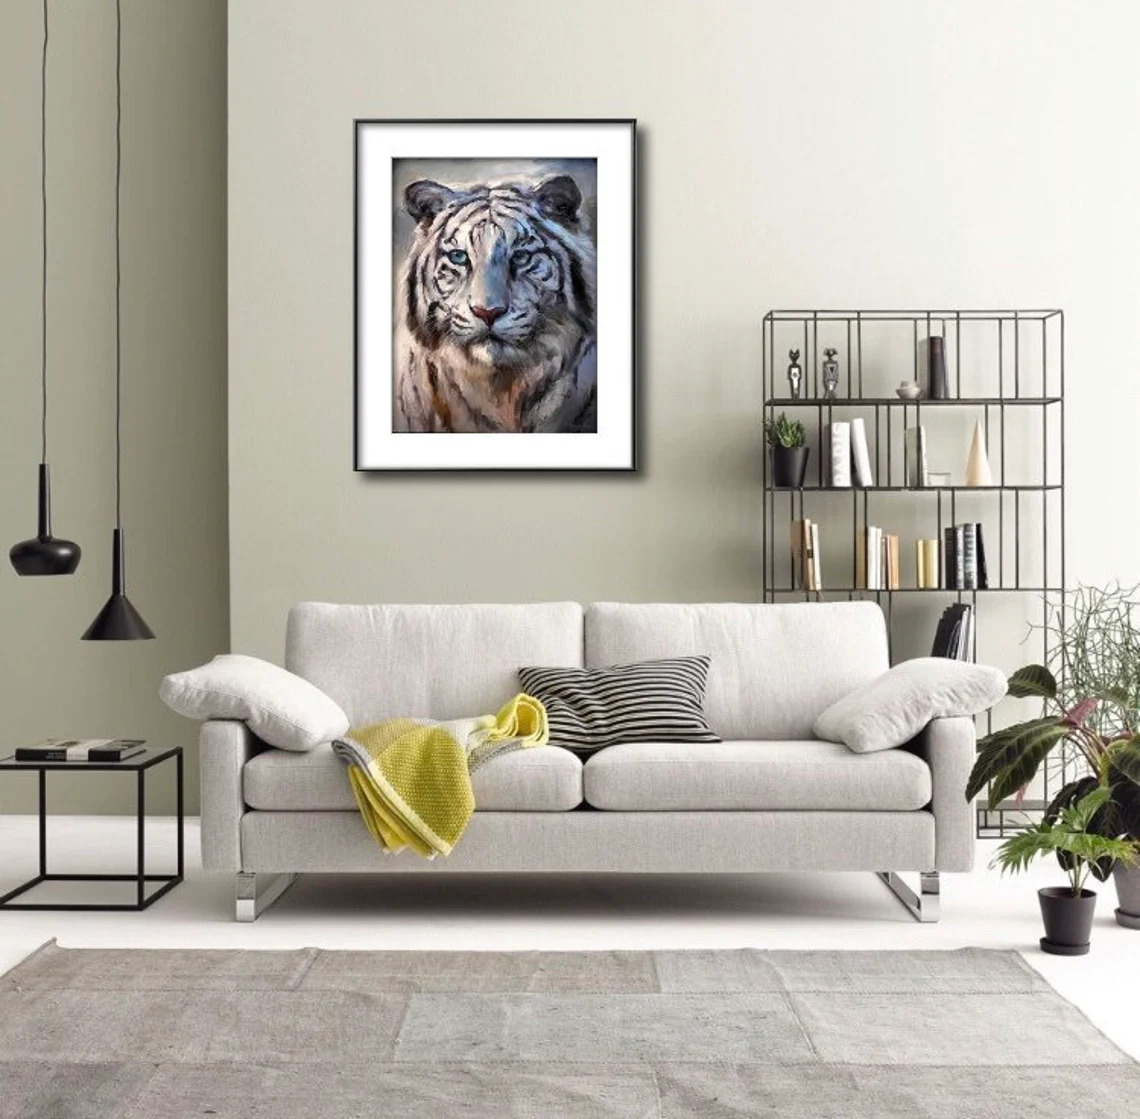 "Old Friend" - White Tiger - Wildlife Artwork Sample on Wall